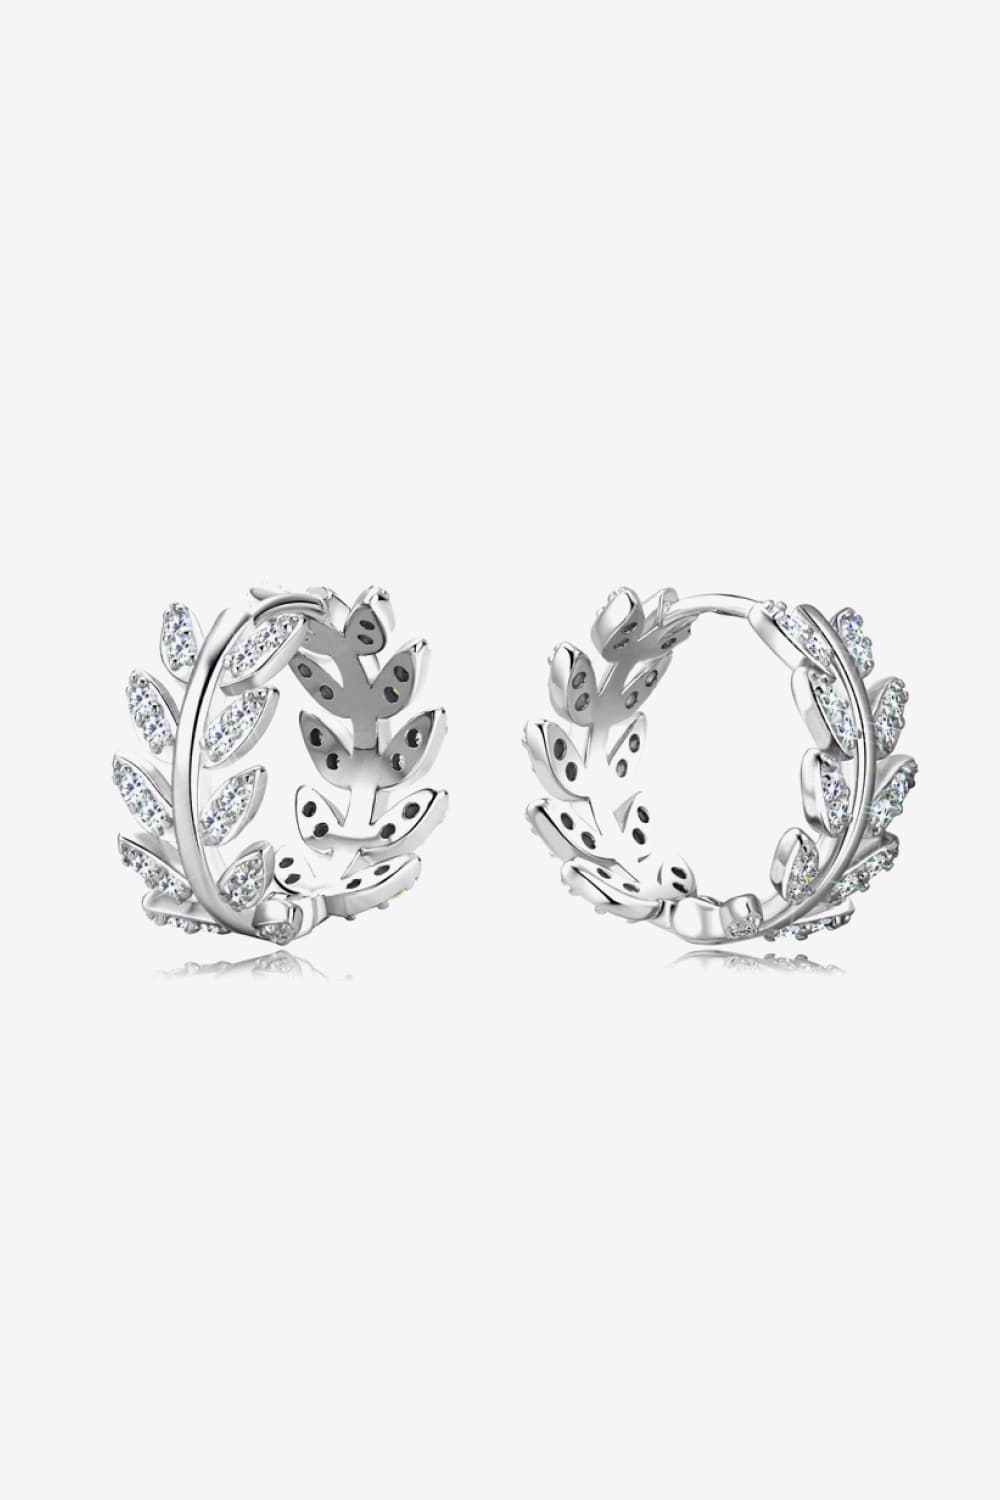 Moissanite Leaf 925 Sterling Silver Earrings - Earrings - FITGGINS